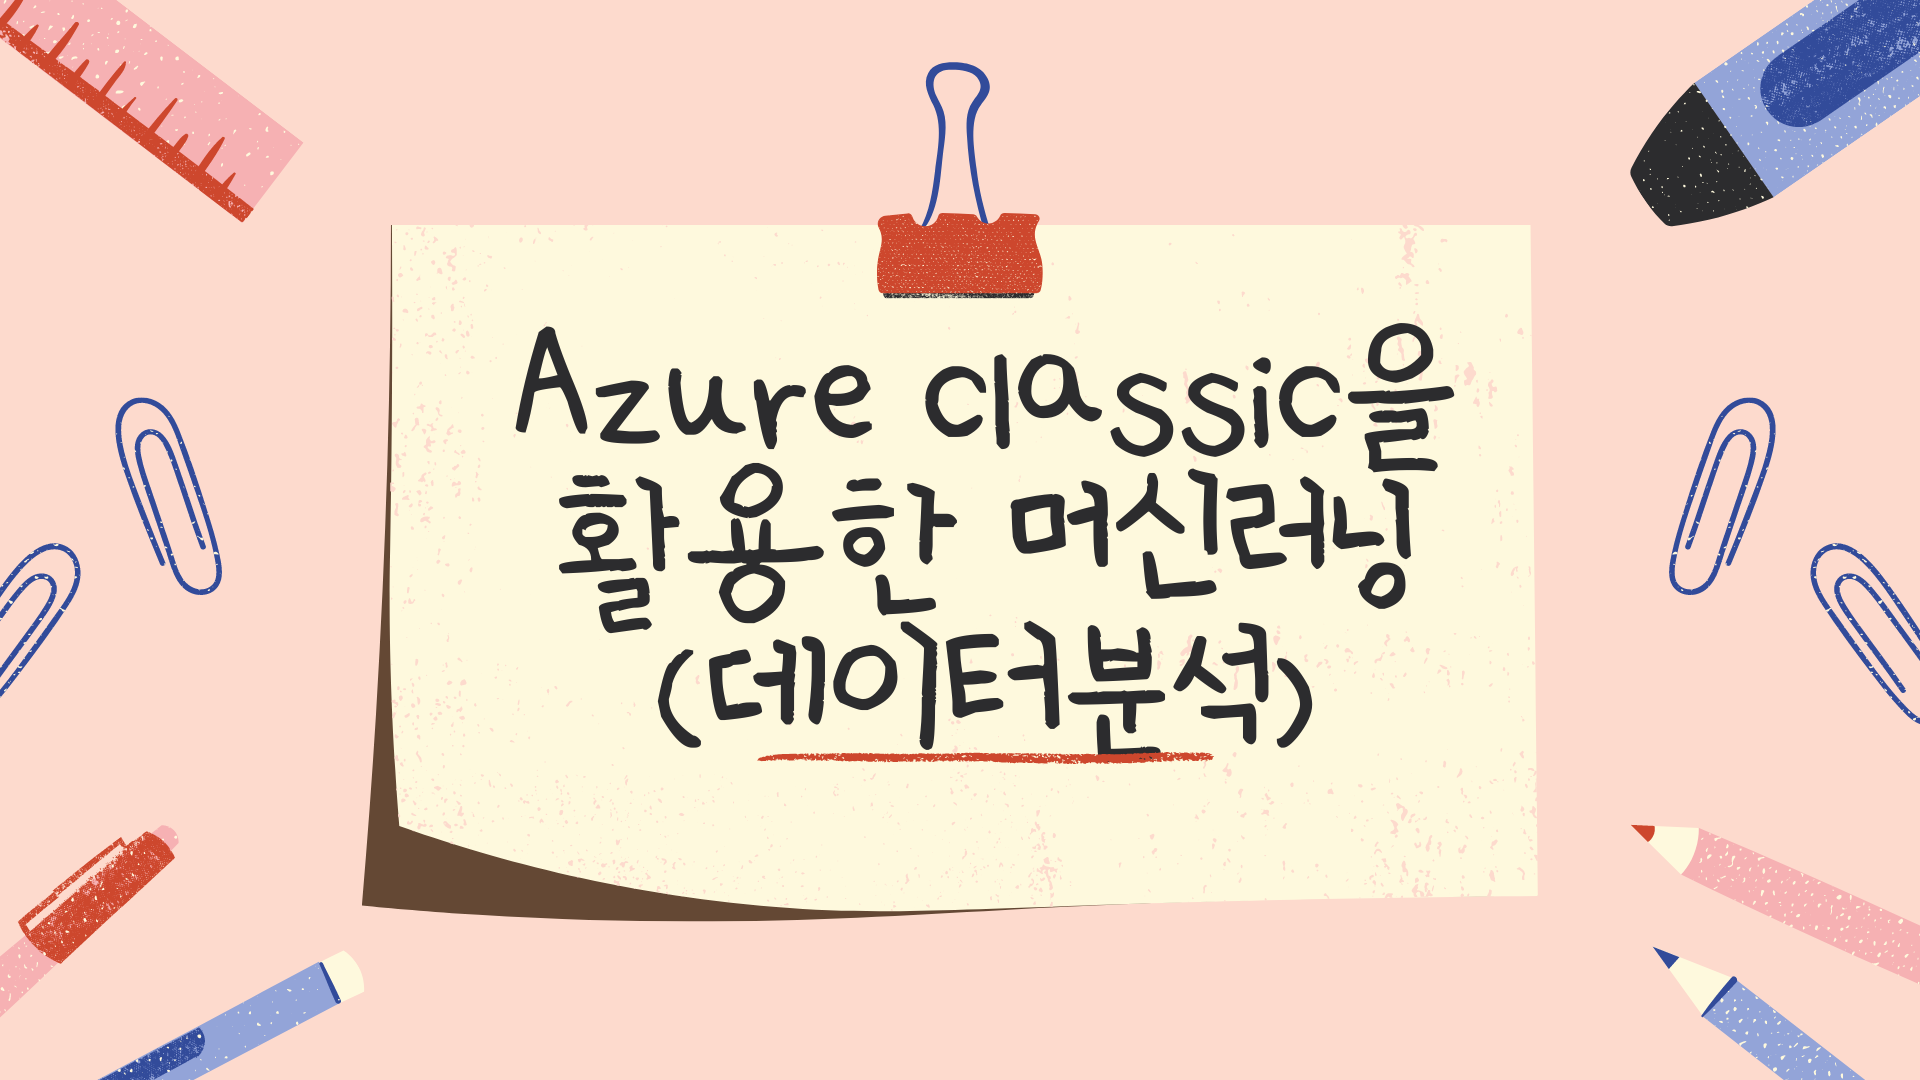 AZURE classic을 활용한 머신러닝(데이터분석)0